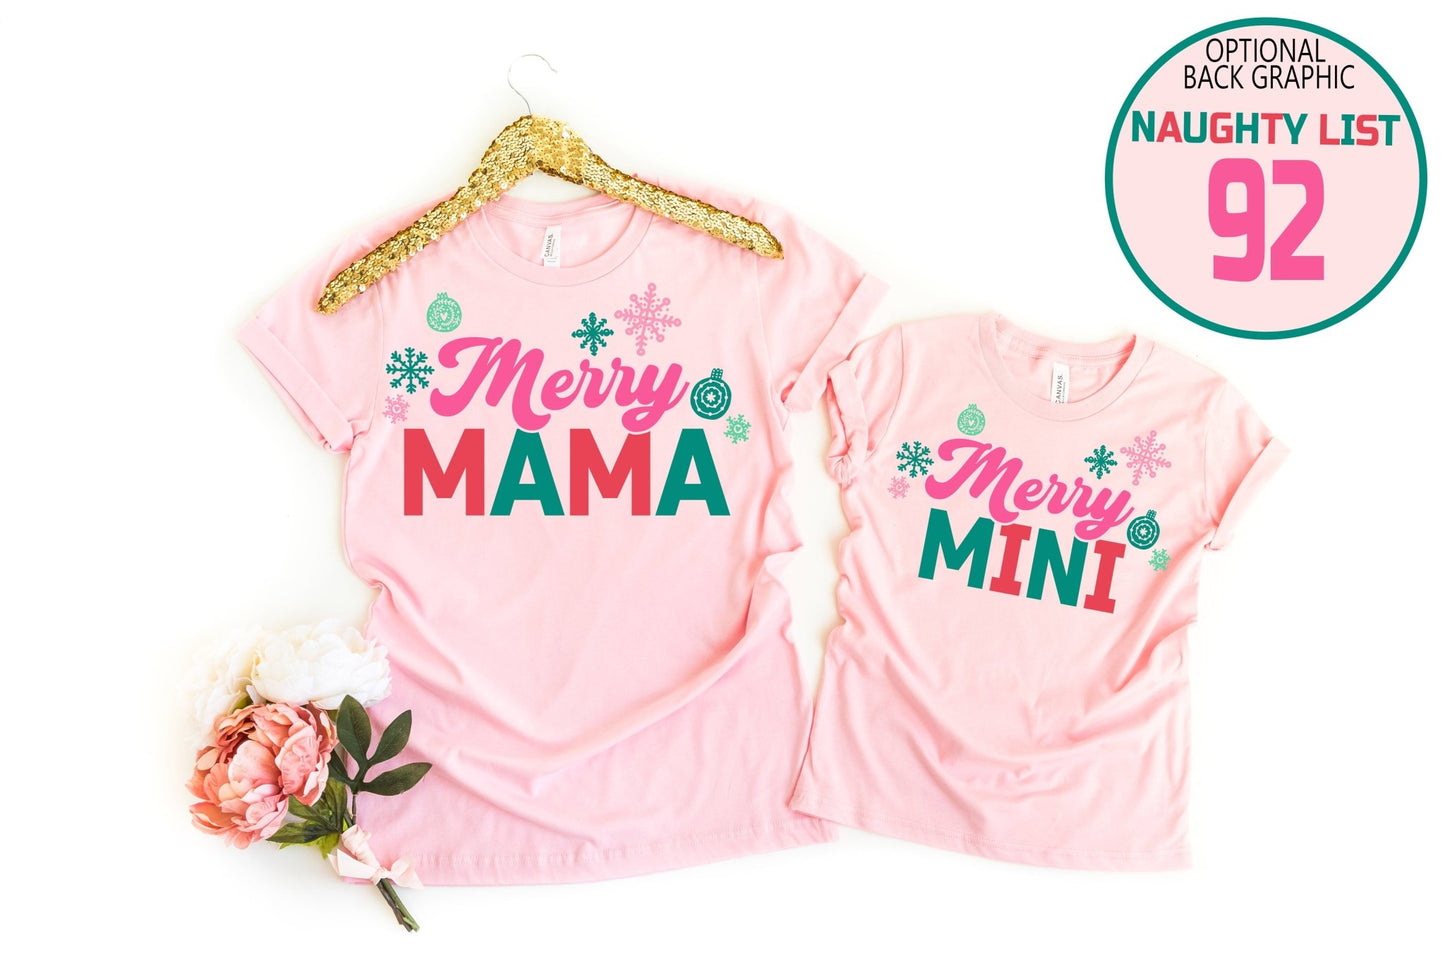 Merry Mama & Mini Bright Christmas T-Shirts - Squishy Cheeks